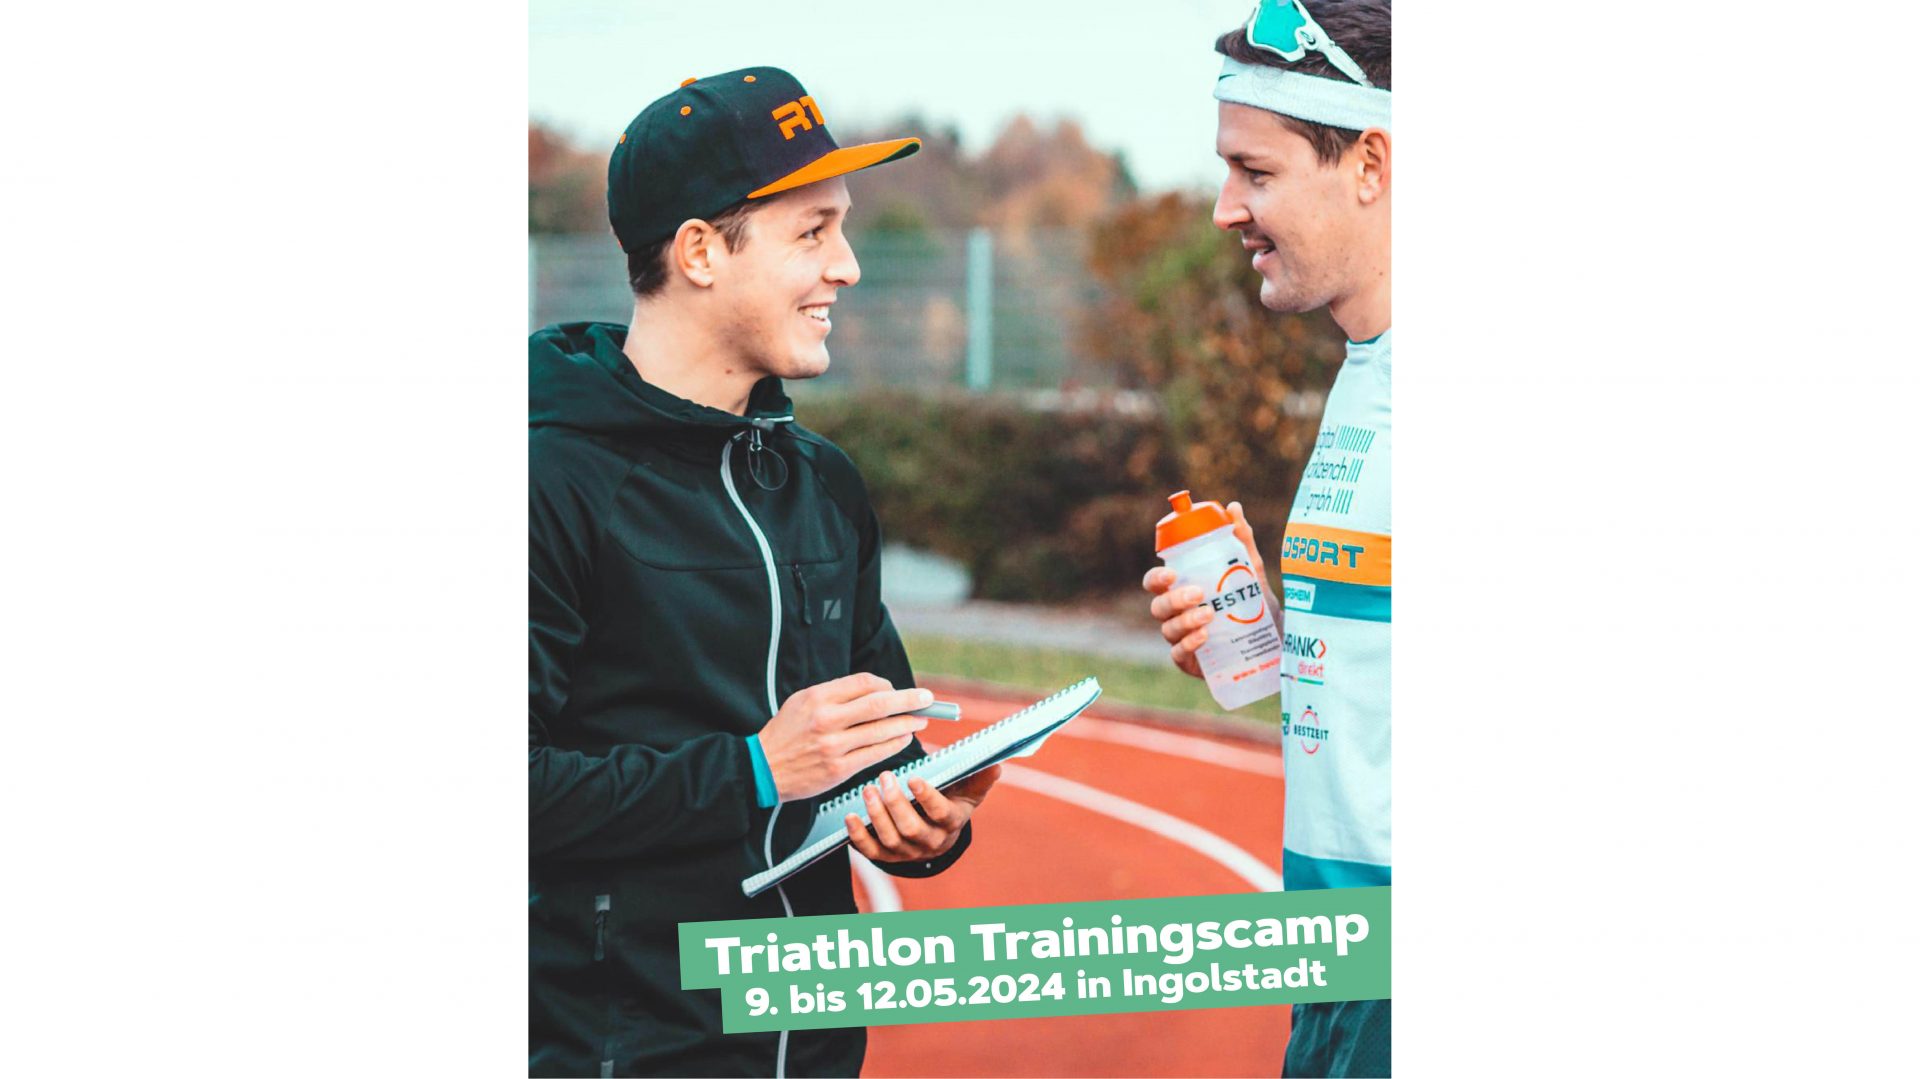 Triathlon Trainingscamp Ingolstadt